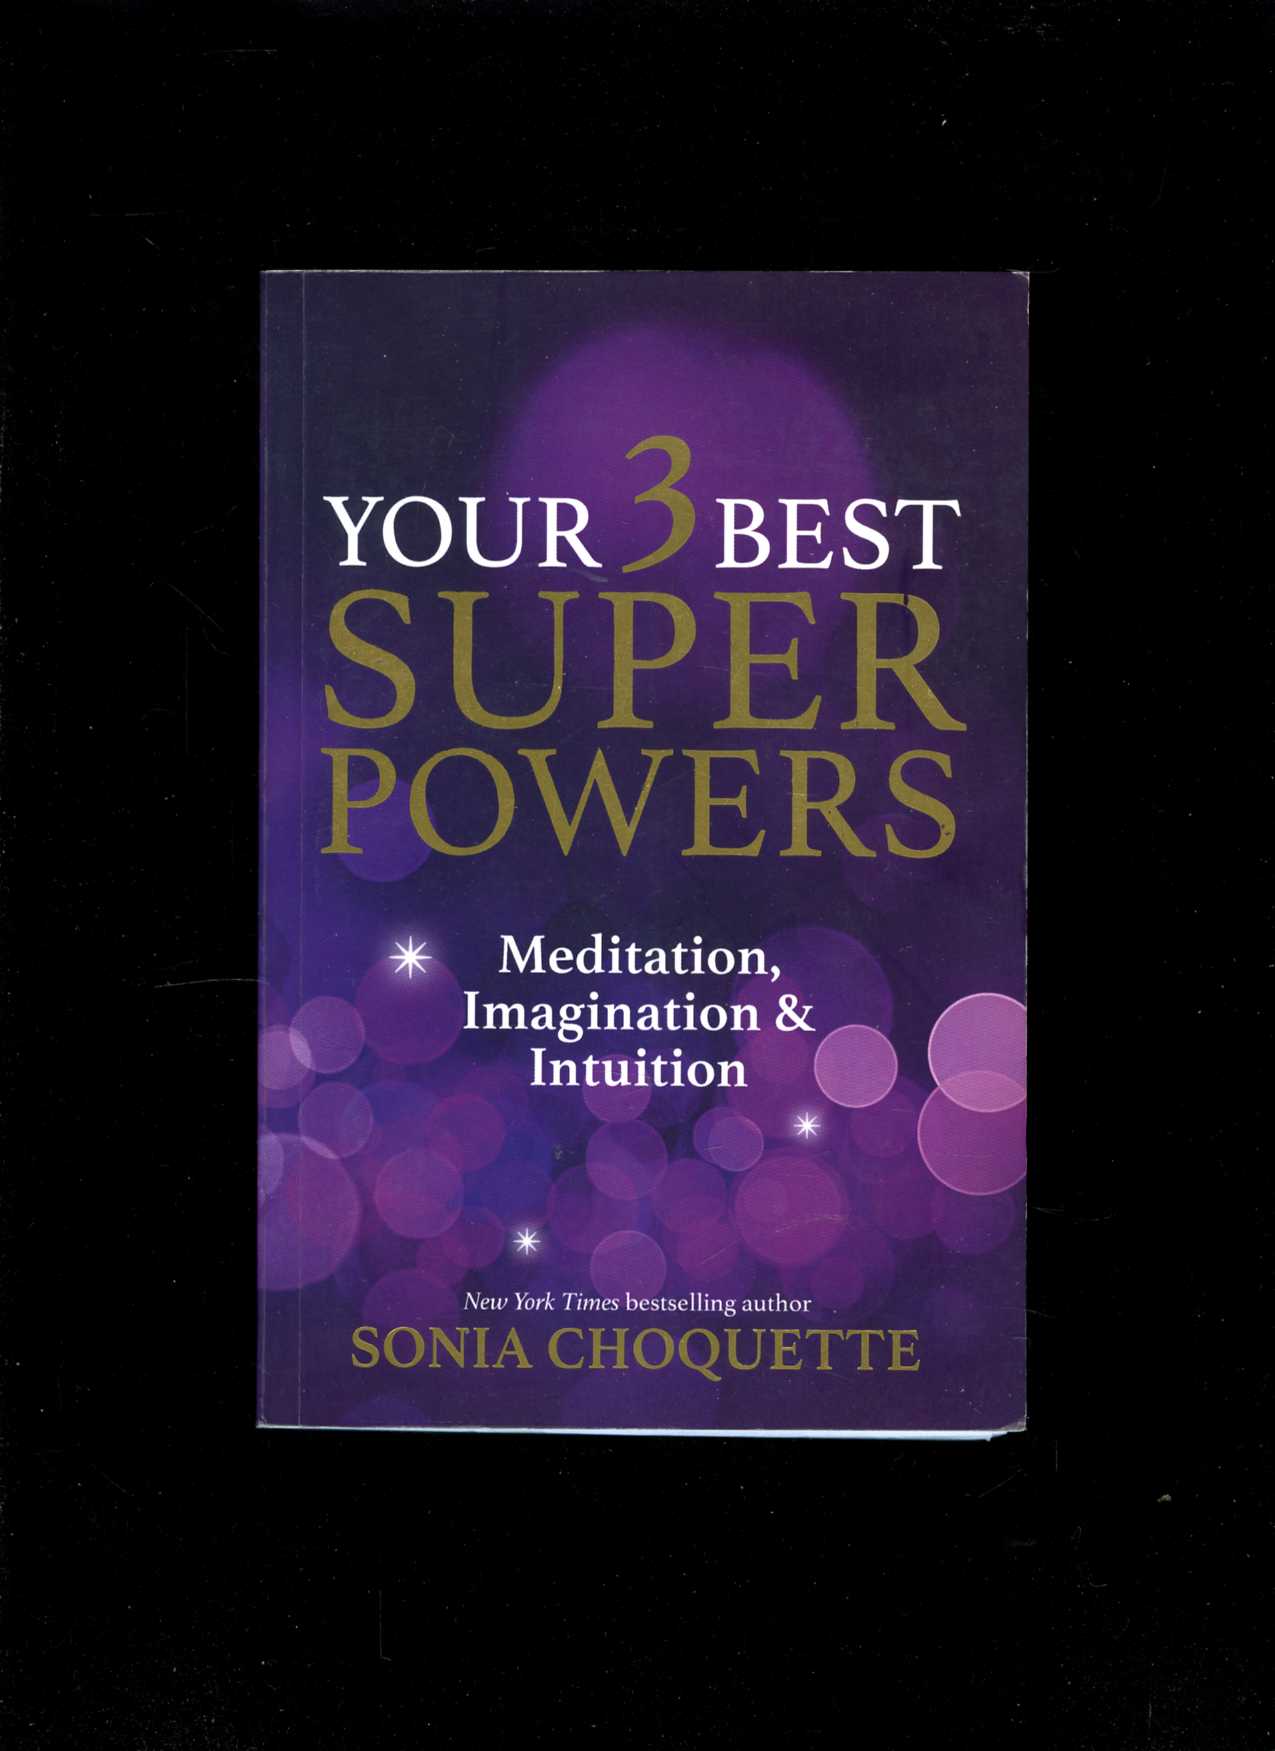 Your 3 Best Super Powers (Sonia Choquette)